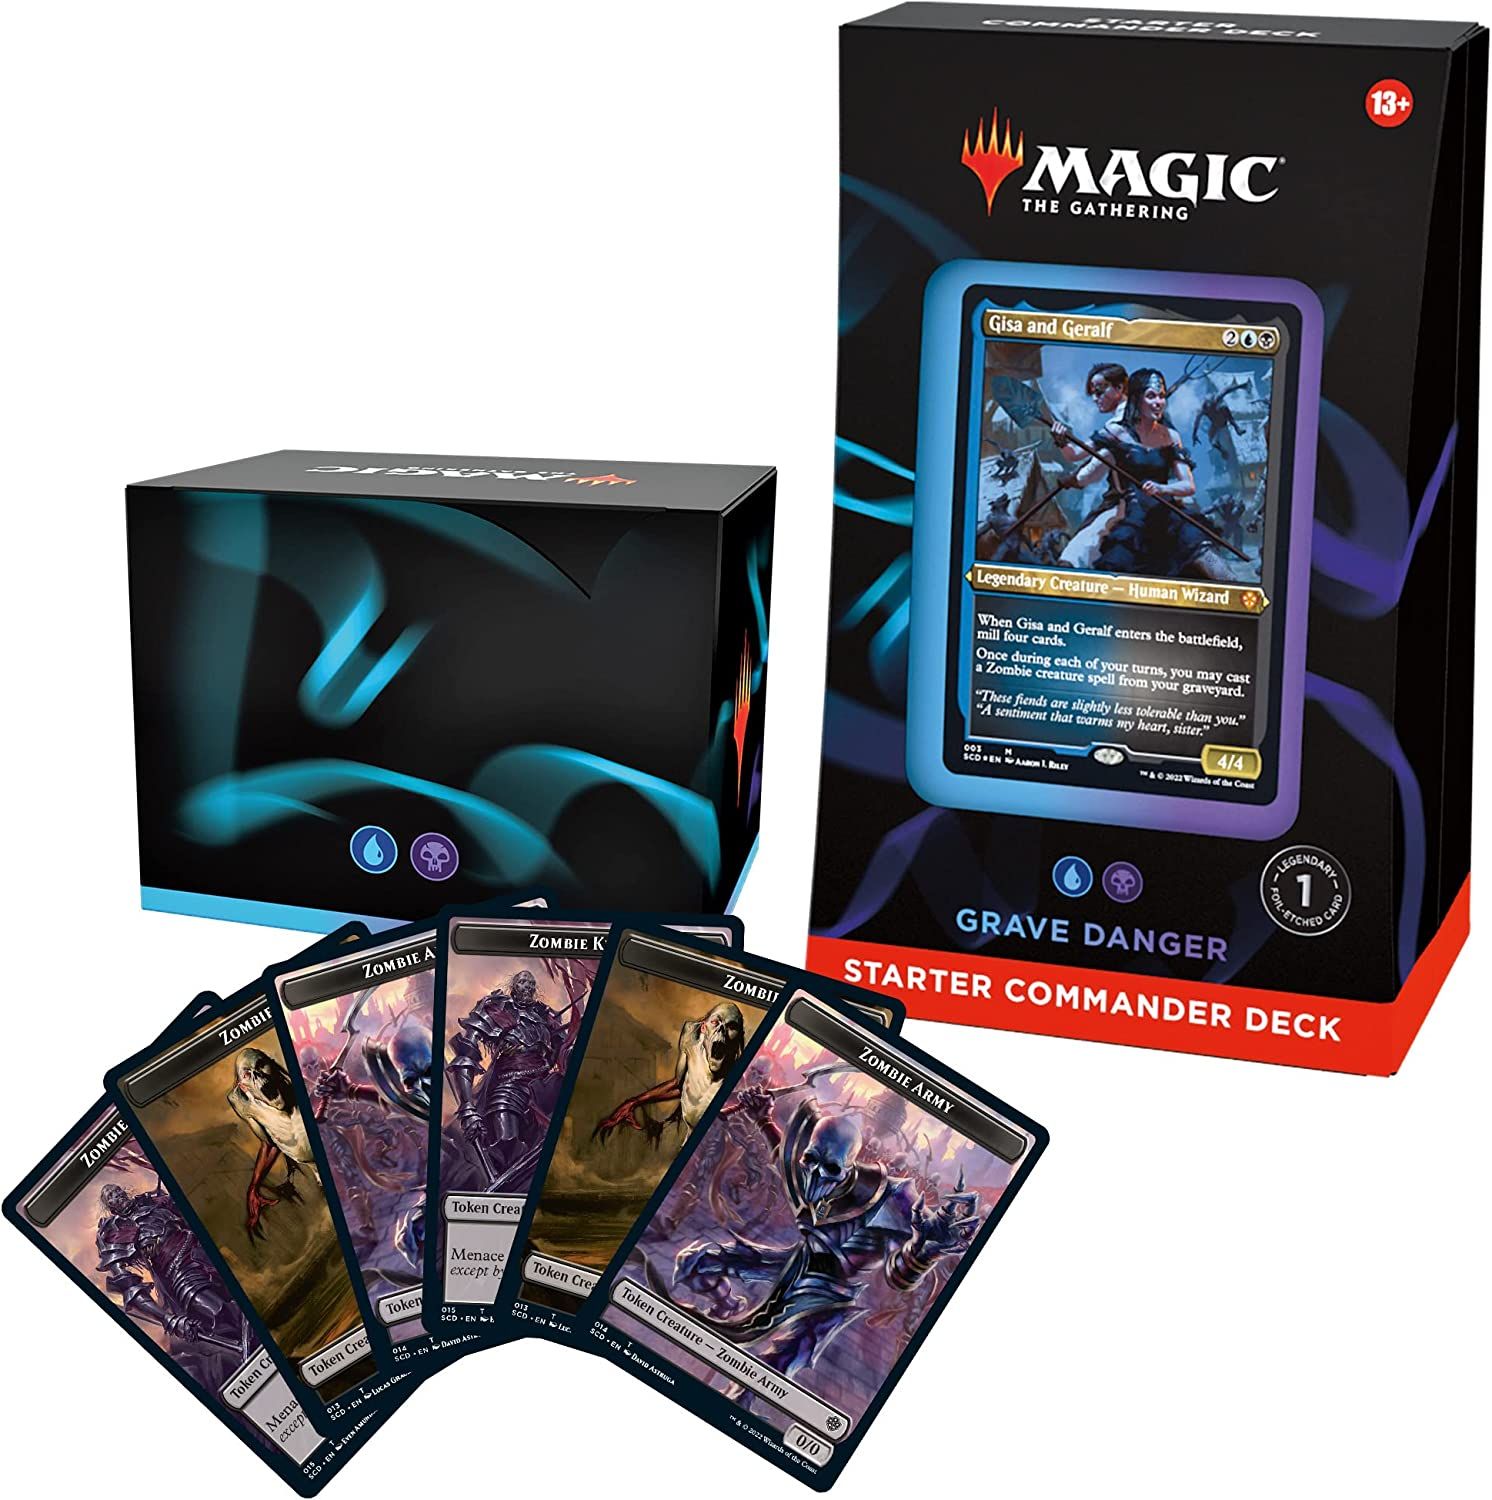 Magic The Gathering Starter Commander Deck – Grave Danger 1